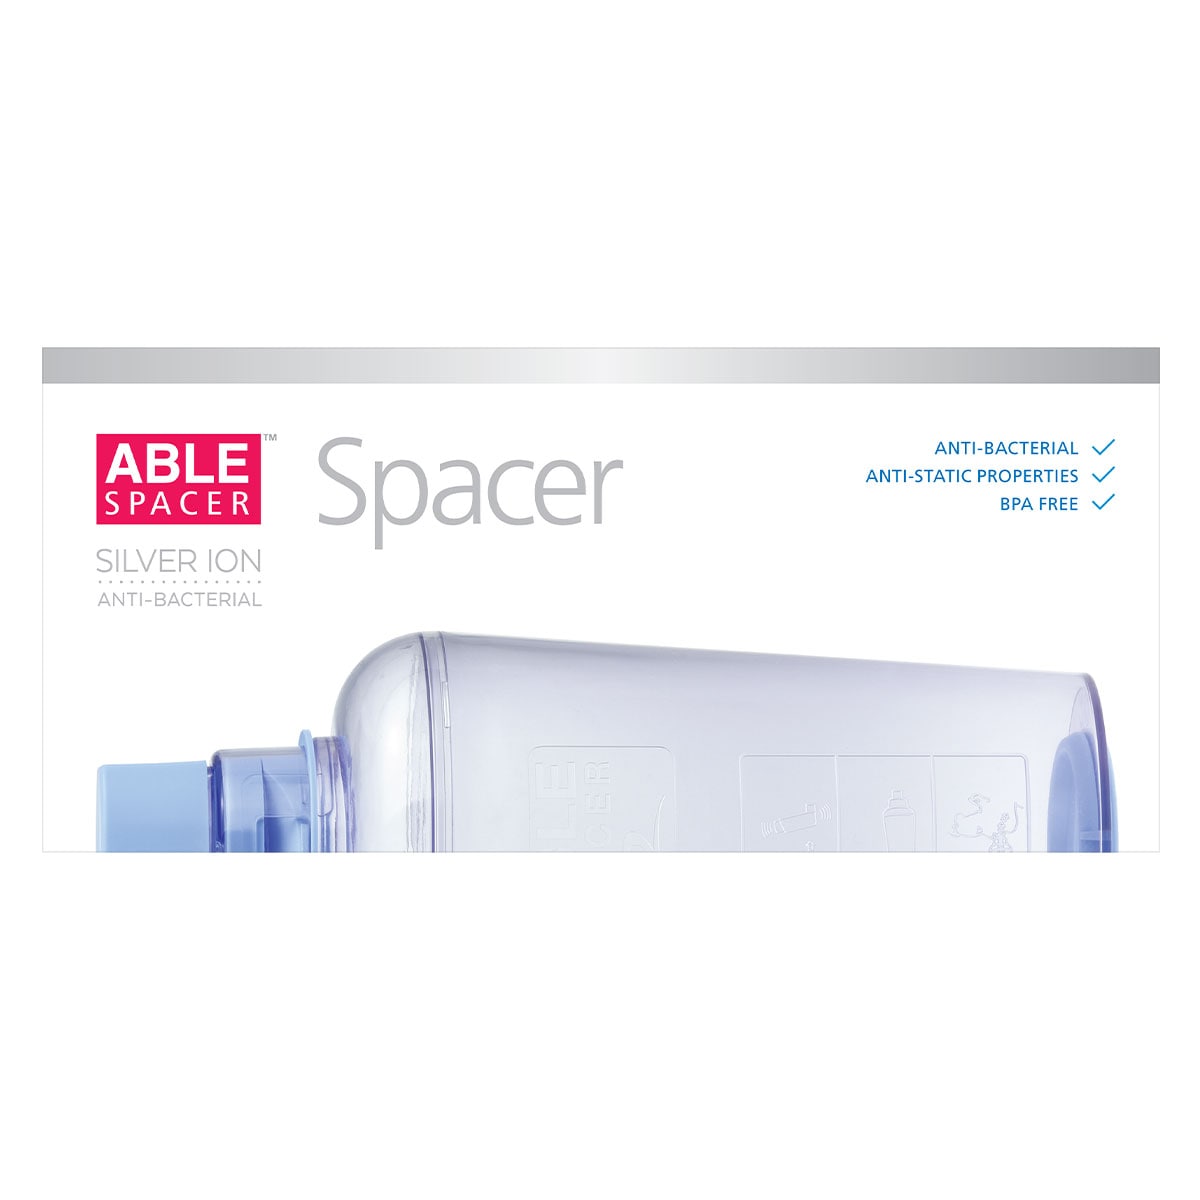 ABLE Spacer AntiBacterial